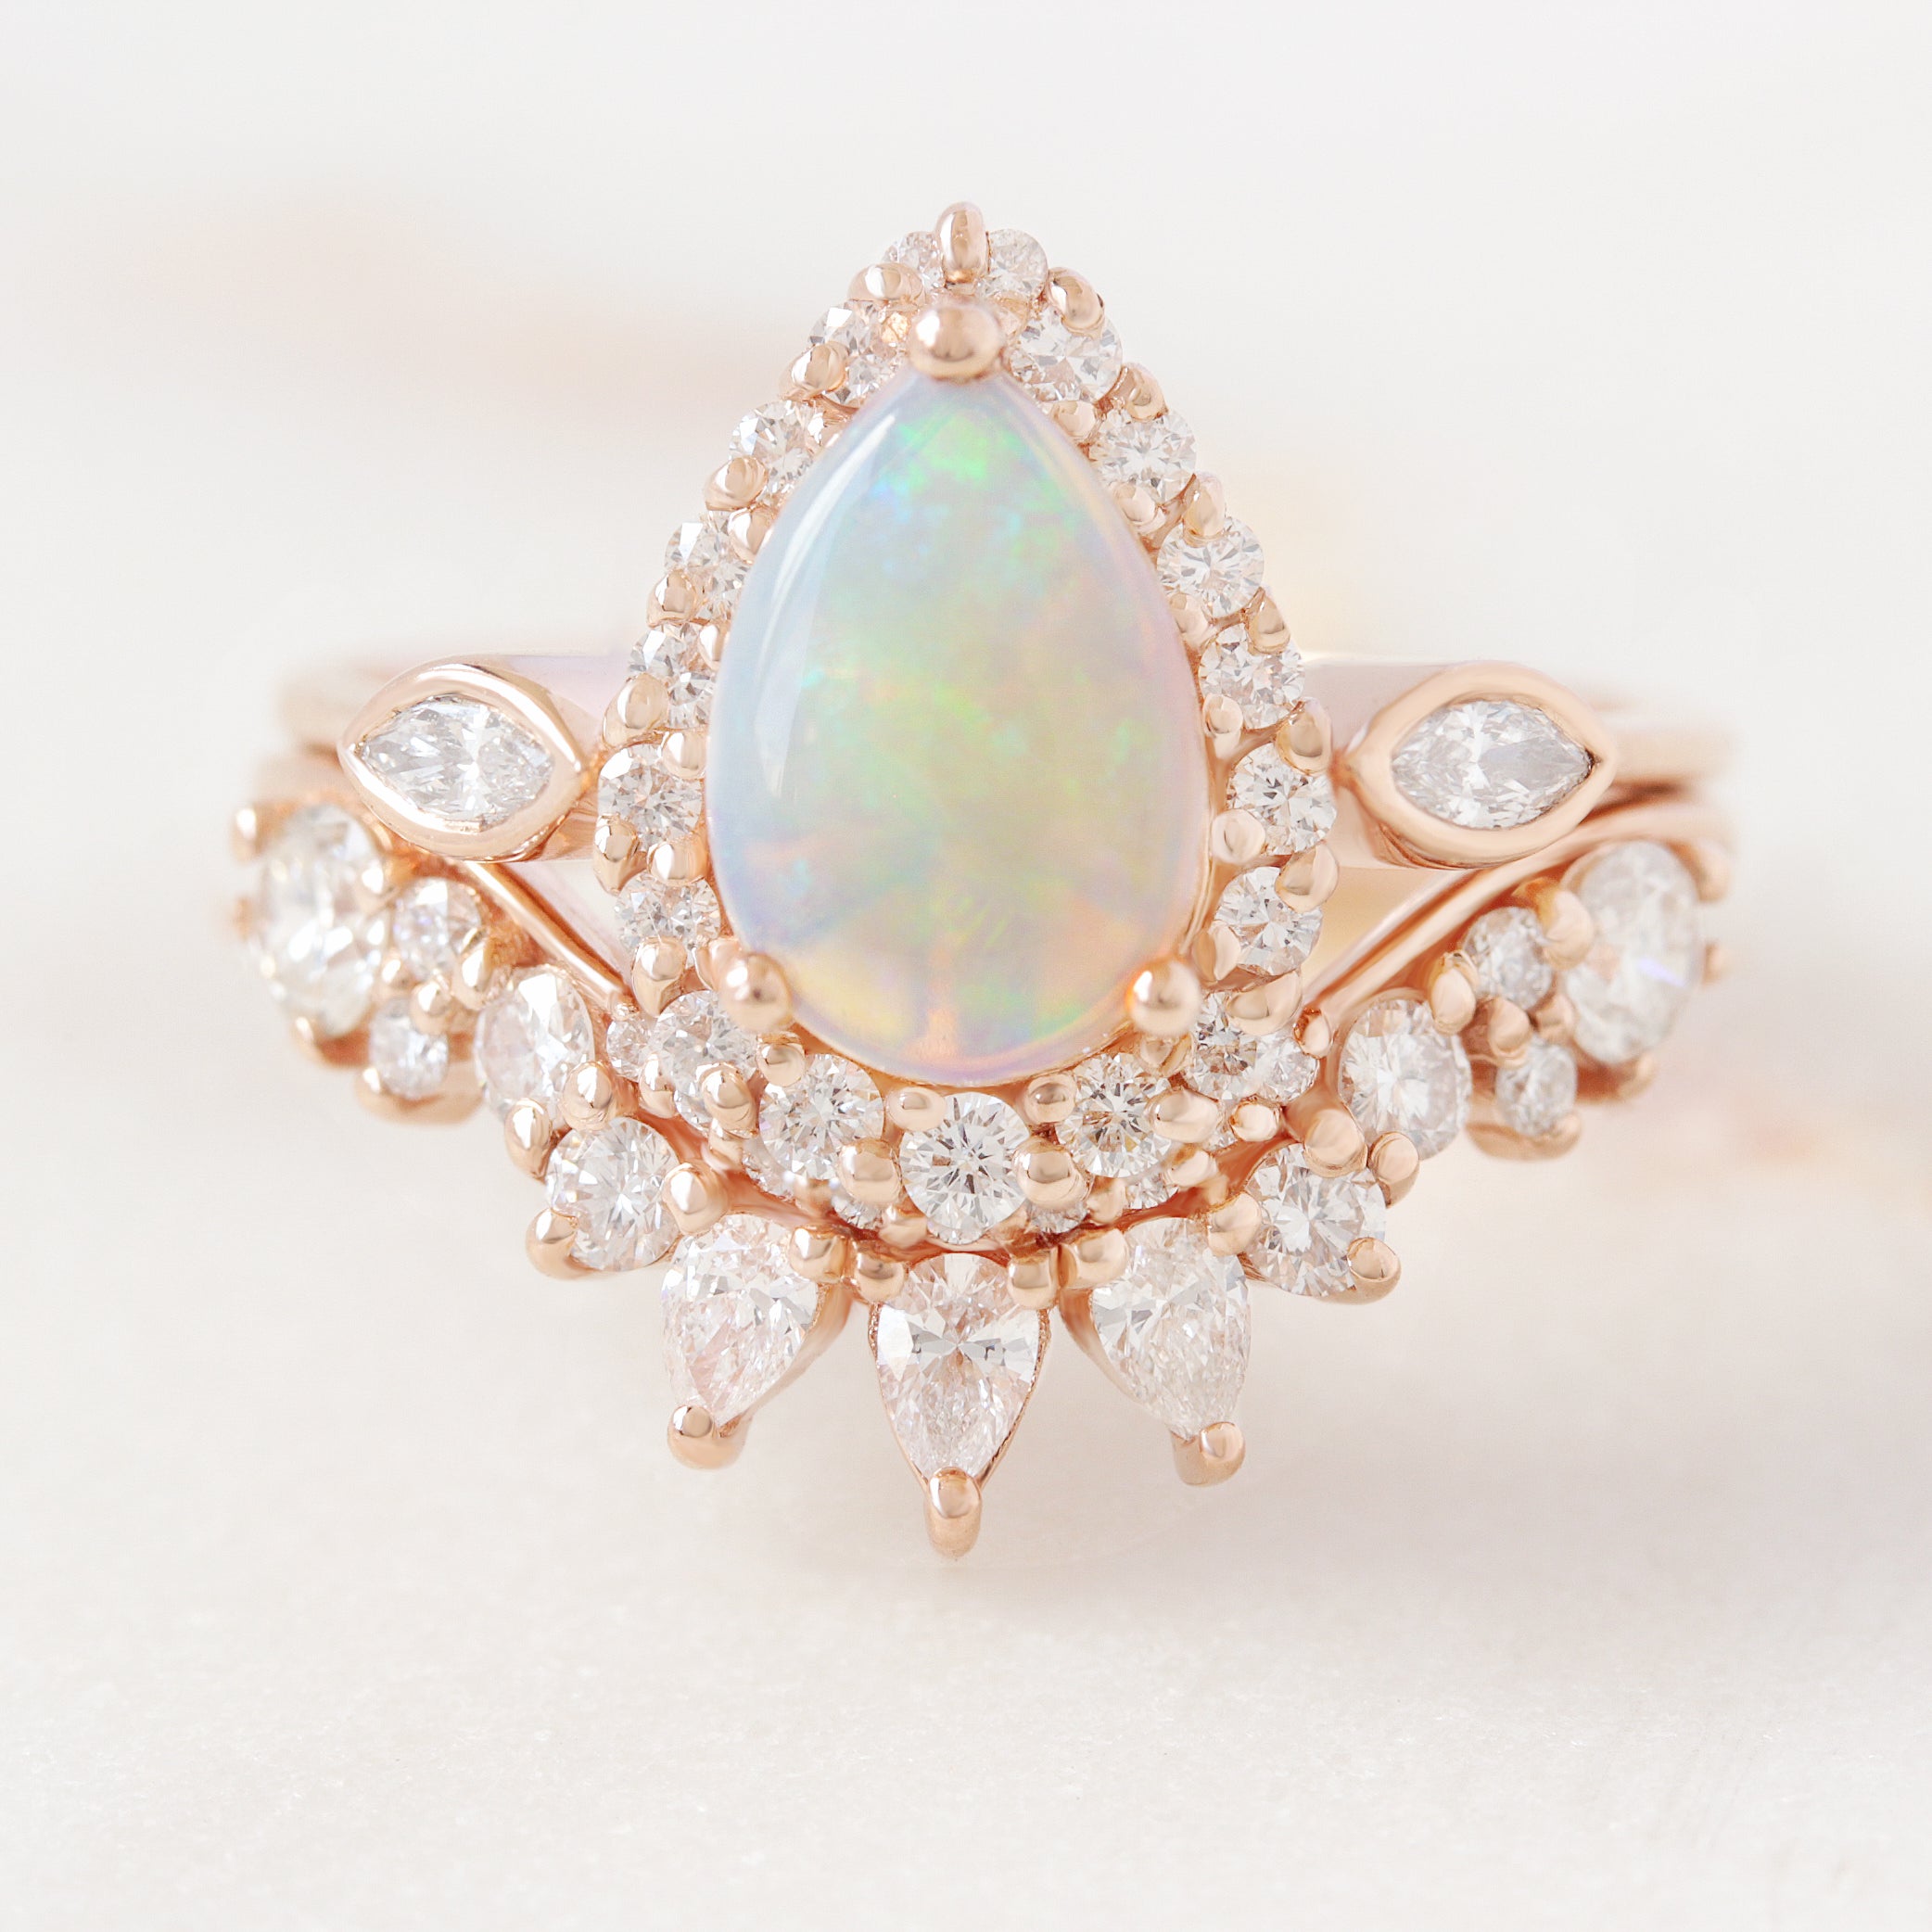 Marquise Diamond Wedding Ring - Valeria ♥